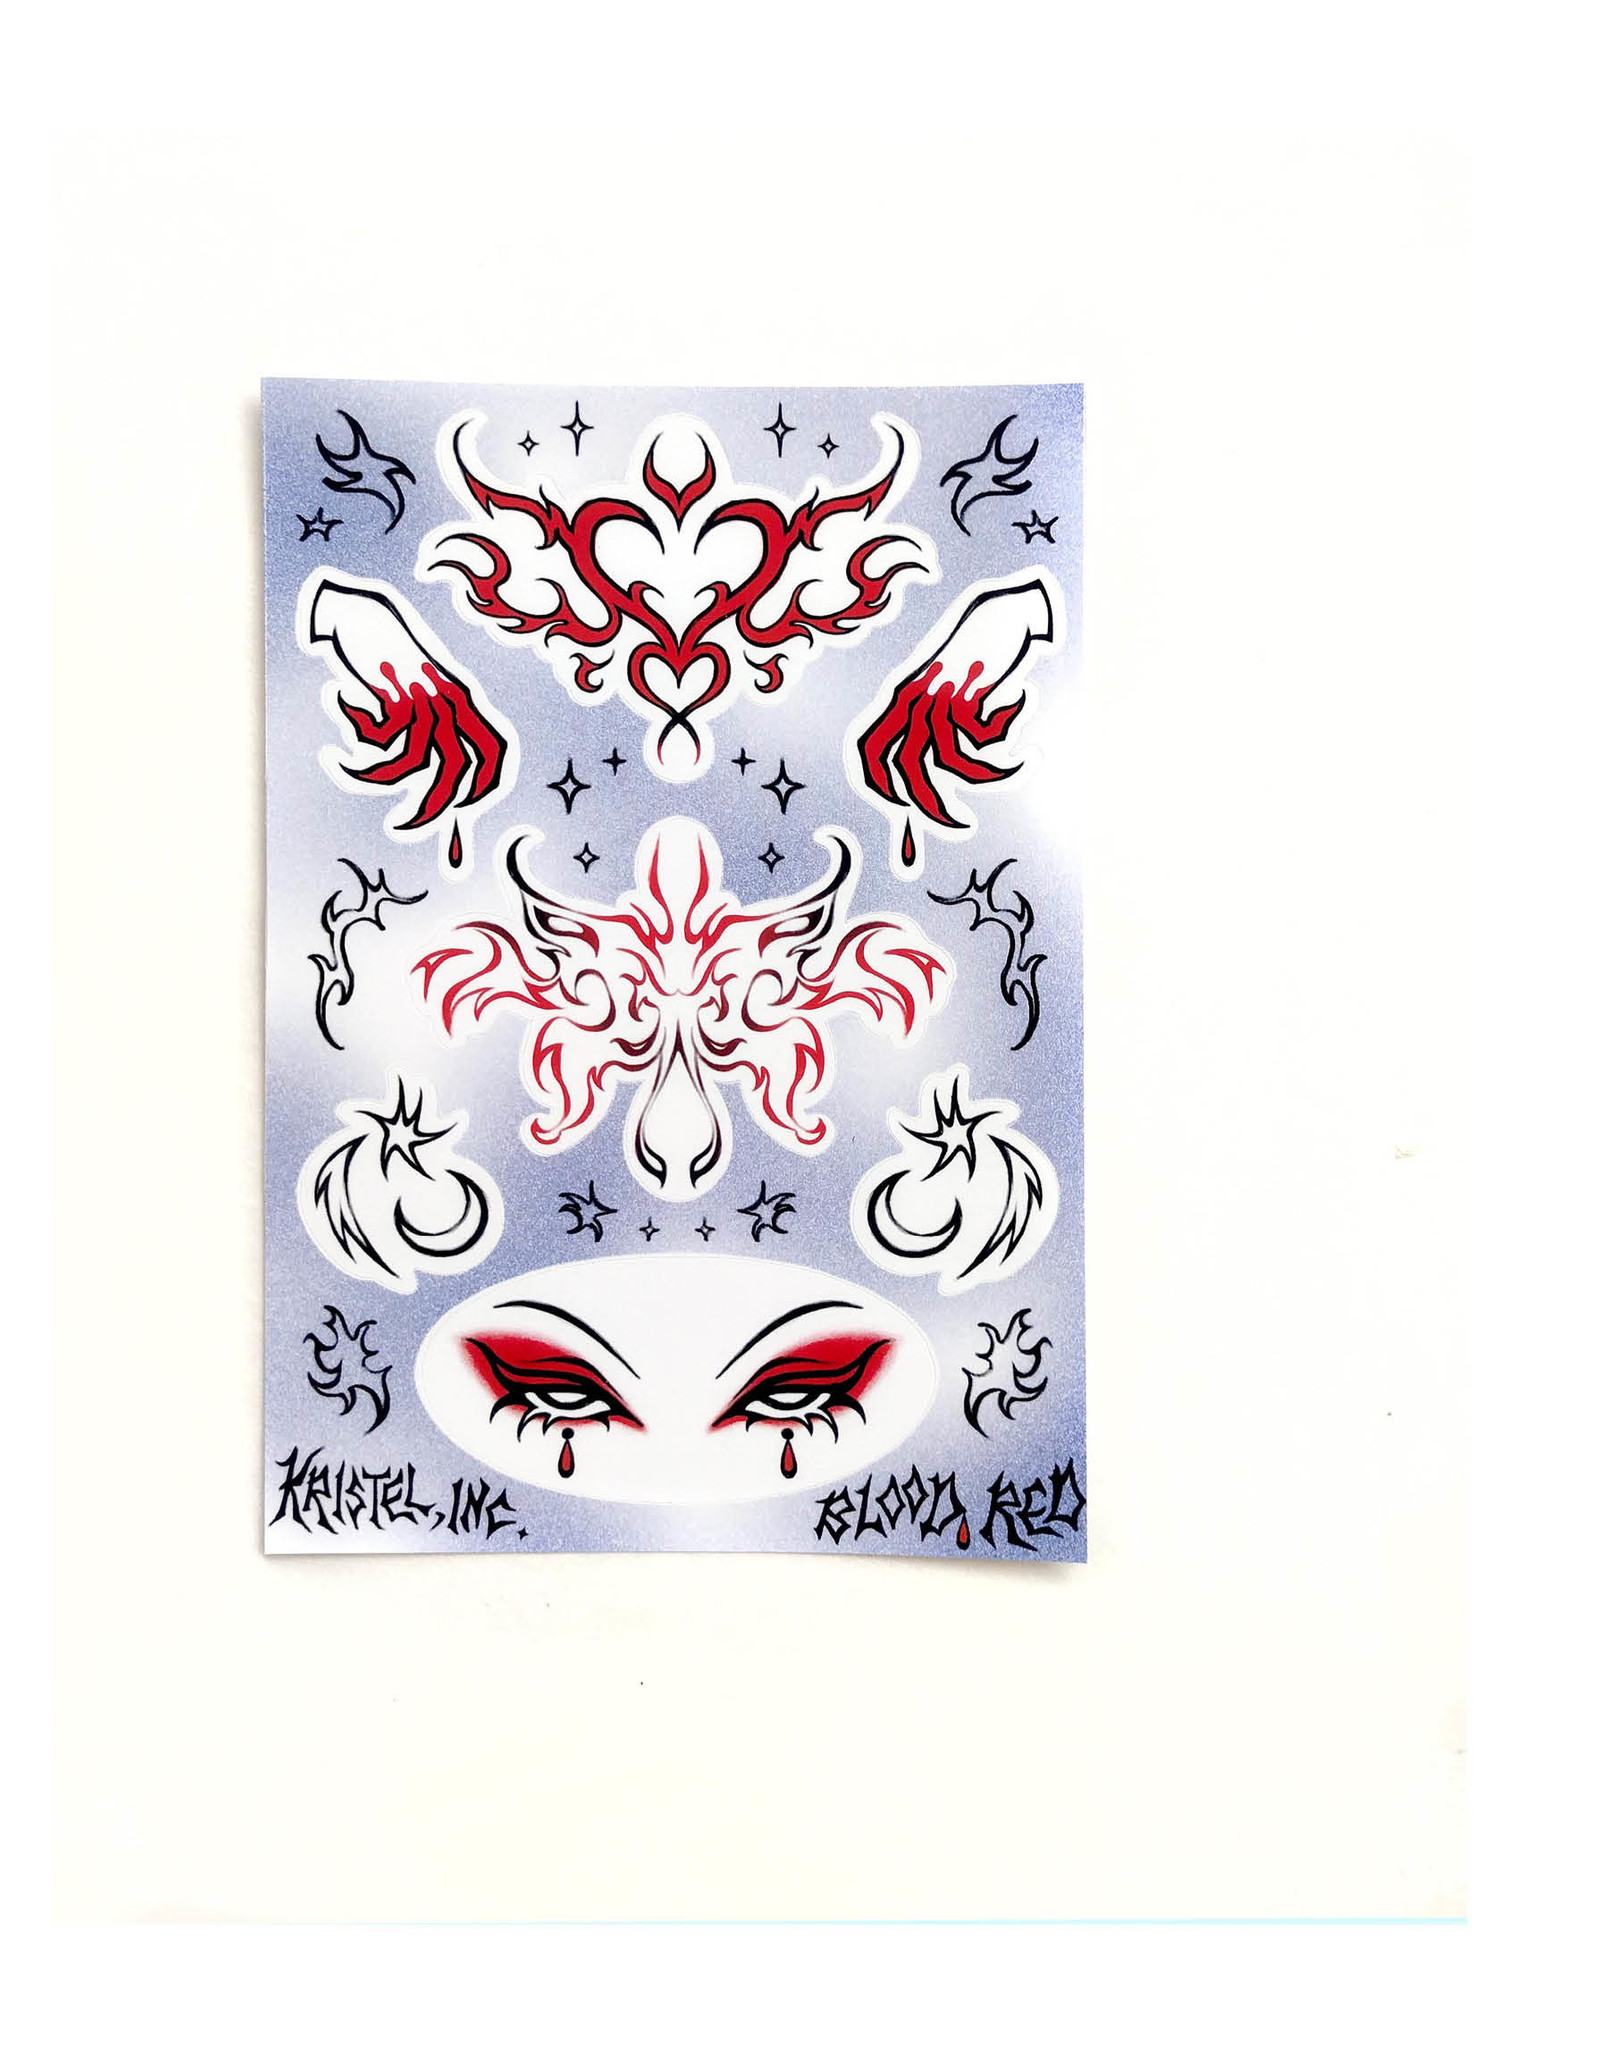 Kristel Becares "Blood Red" sticker sheet by Kristel Becares